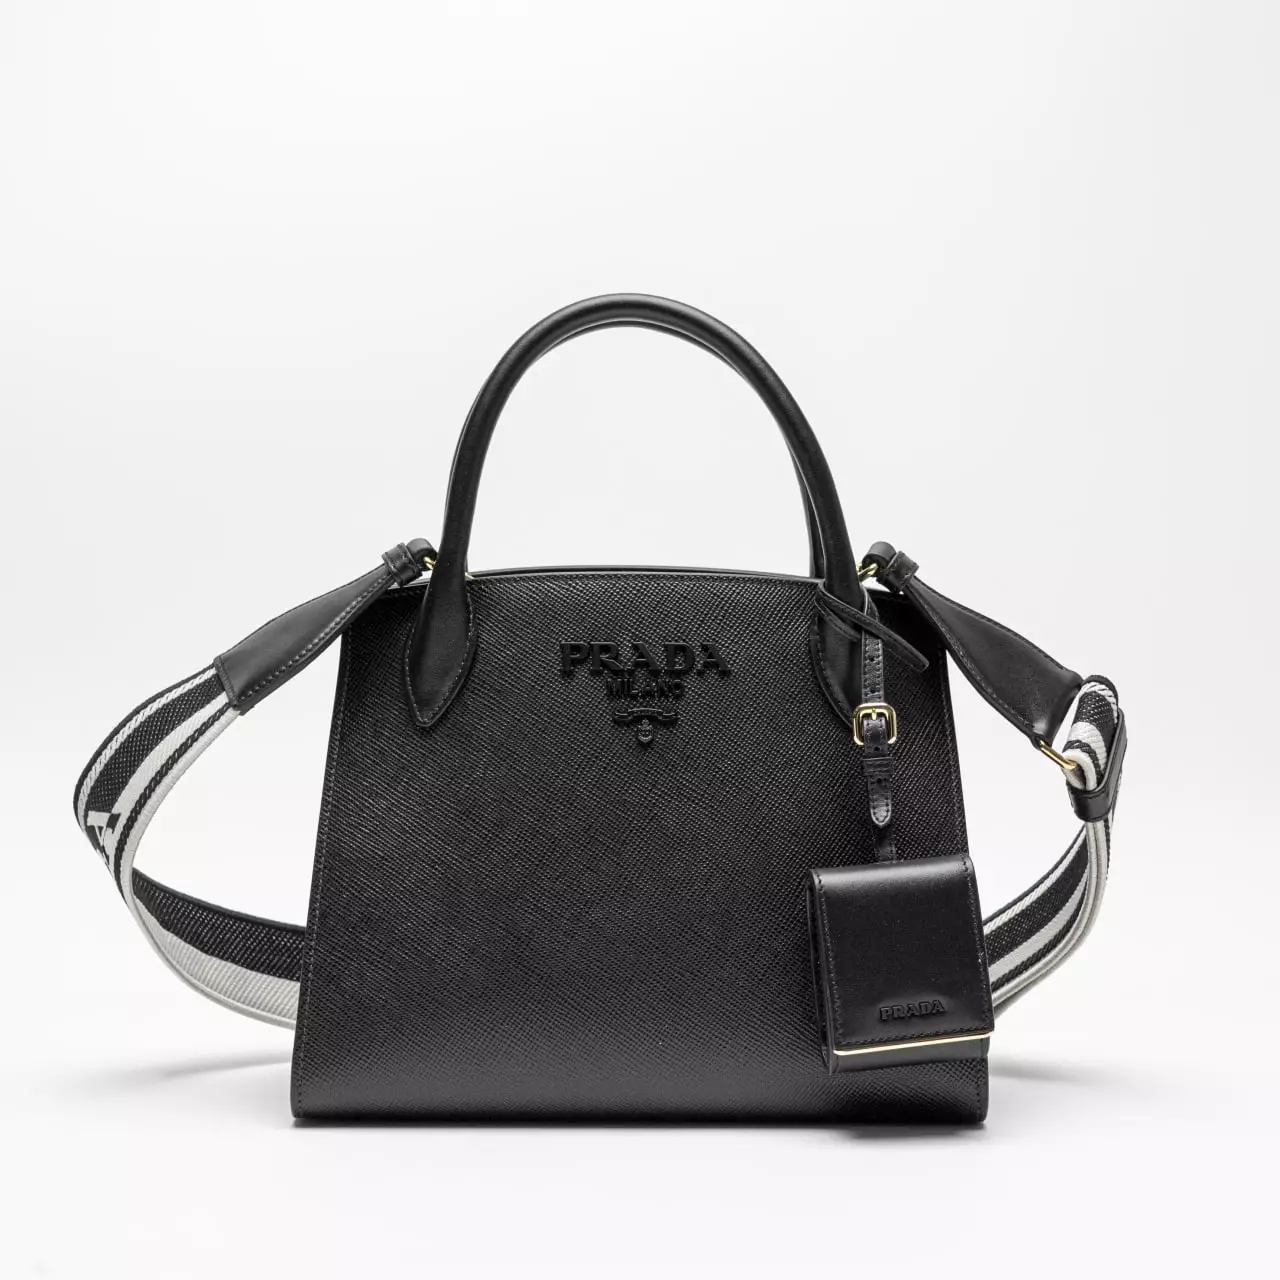 Prada Prada Monochrome Saffiano Leather Bag Black/Papaya at FORZIERI